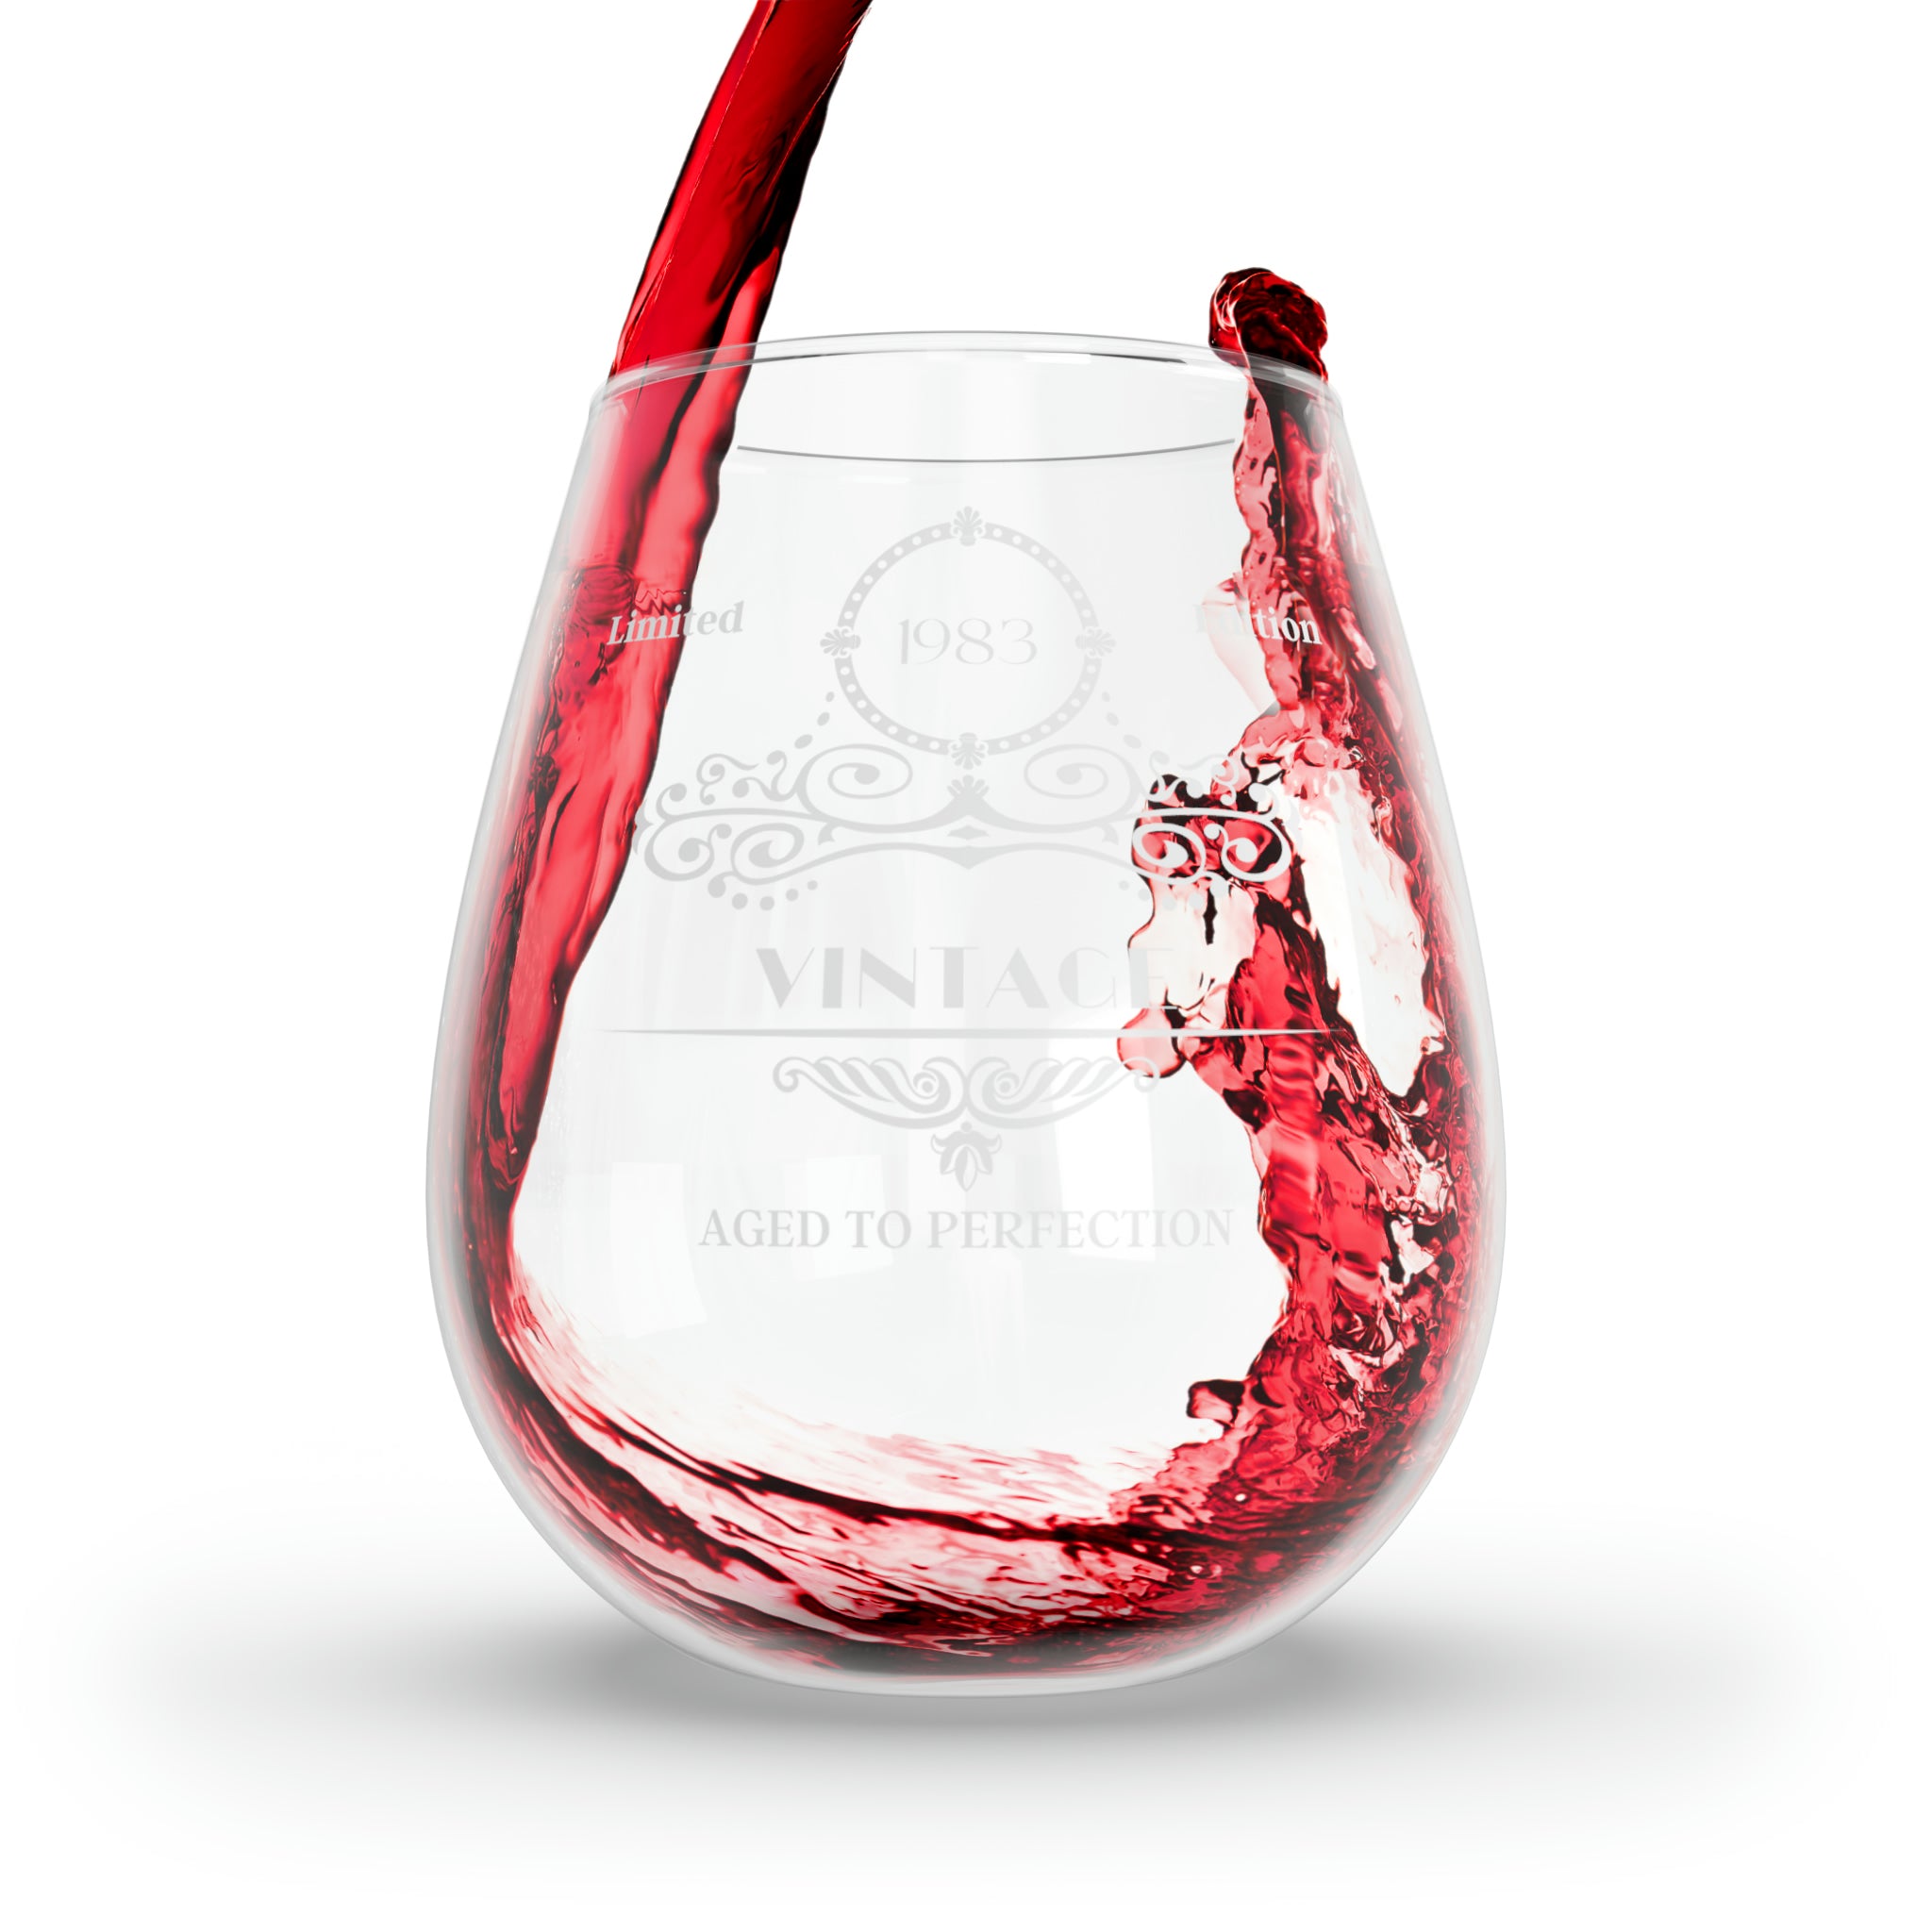 Vintage 1983 - Stemless Wine Glass, 11.75oz